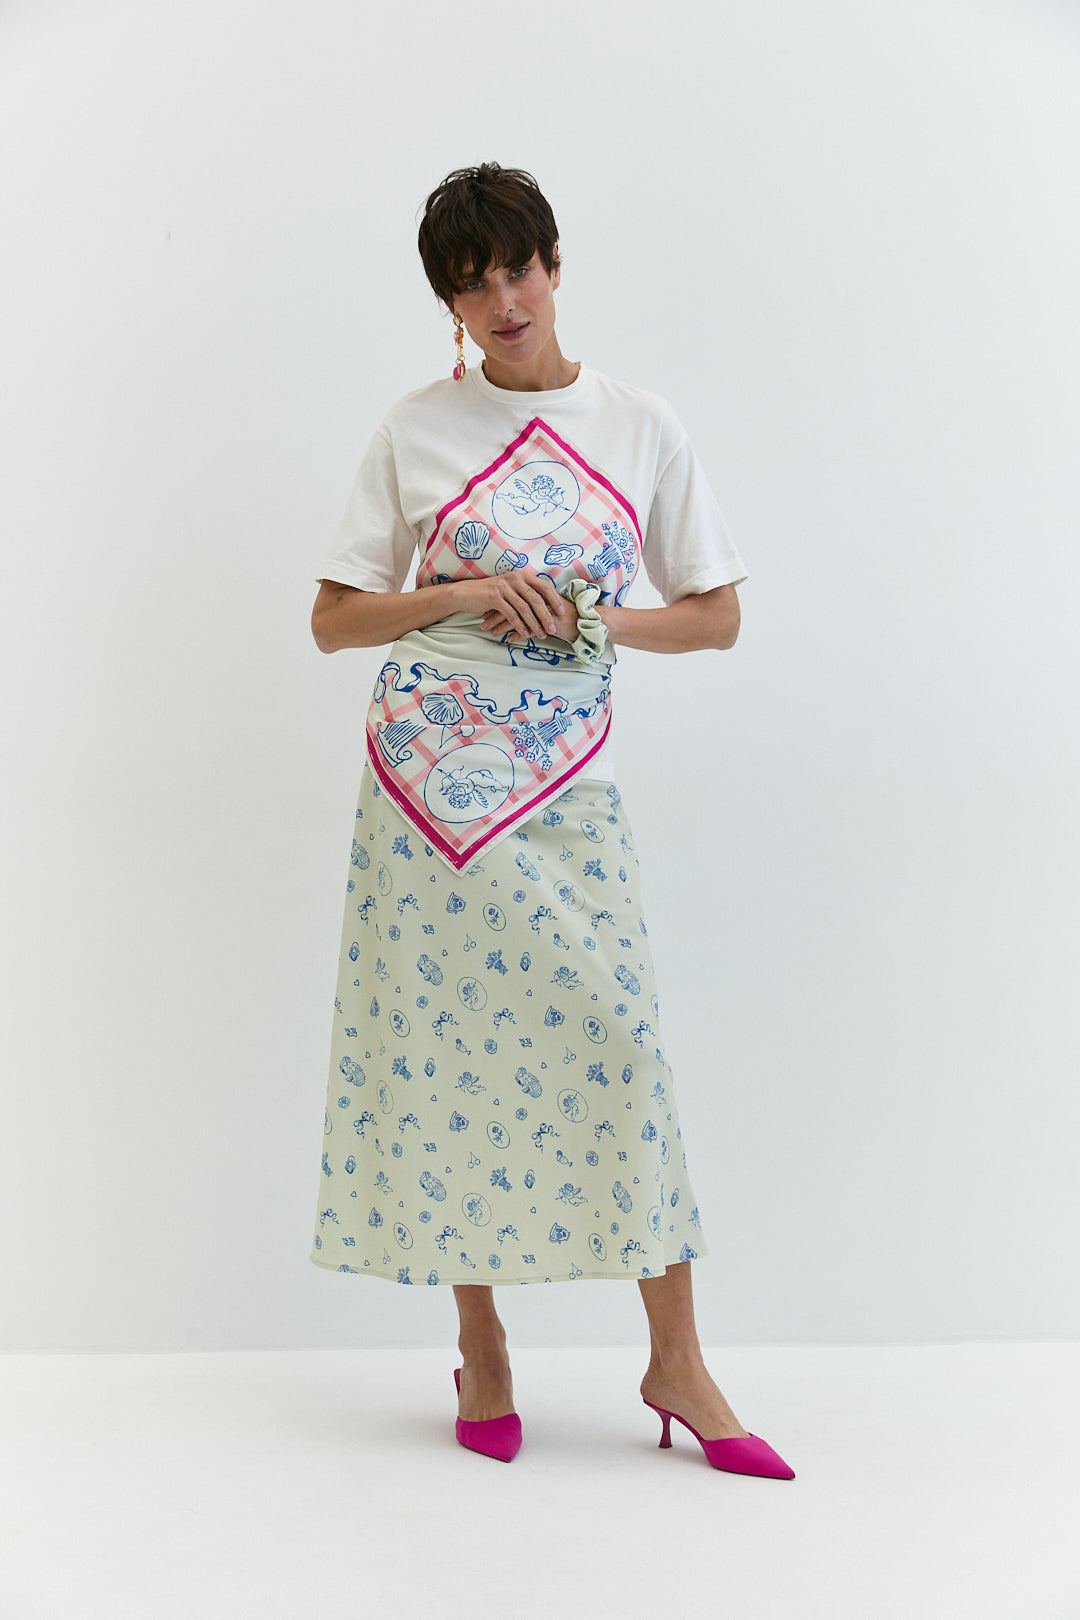 Milk silk skirt "Gentle" in print fabrics